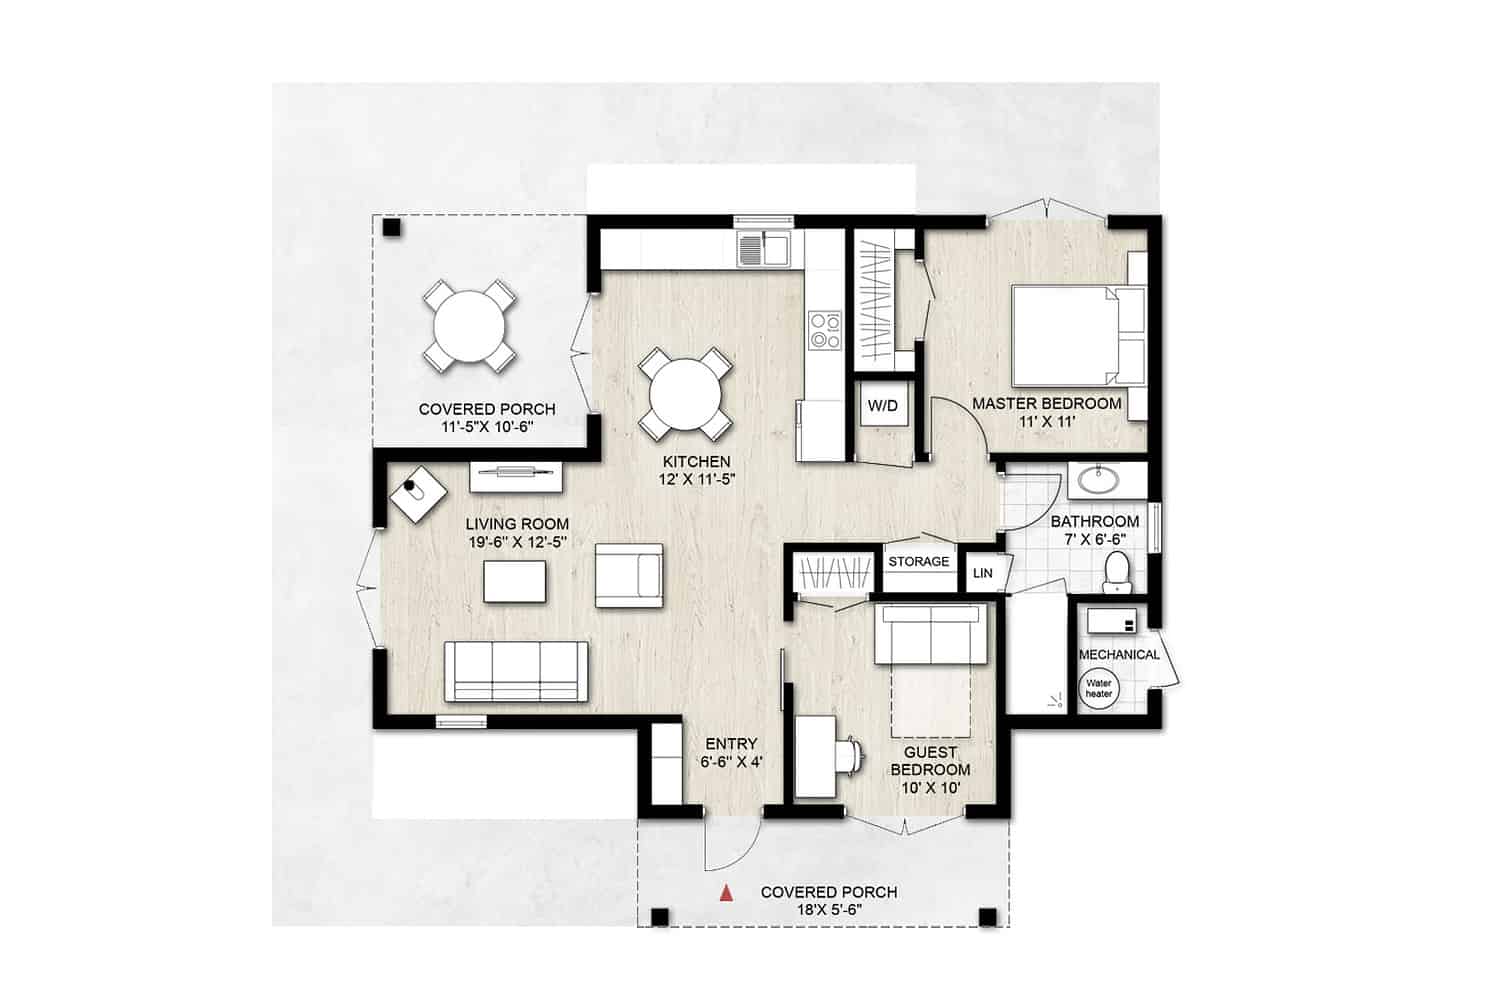 Truoba Mini 219 - 2 bedroom house plan